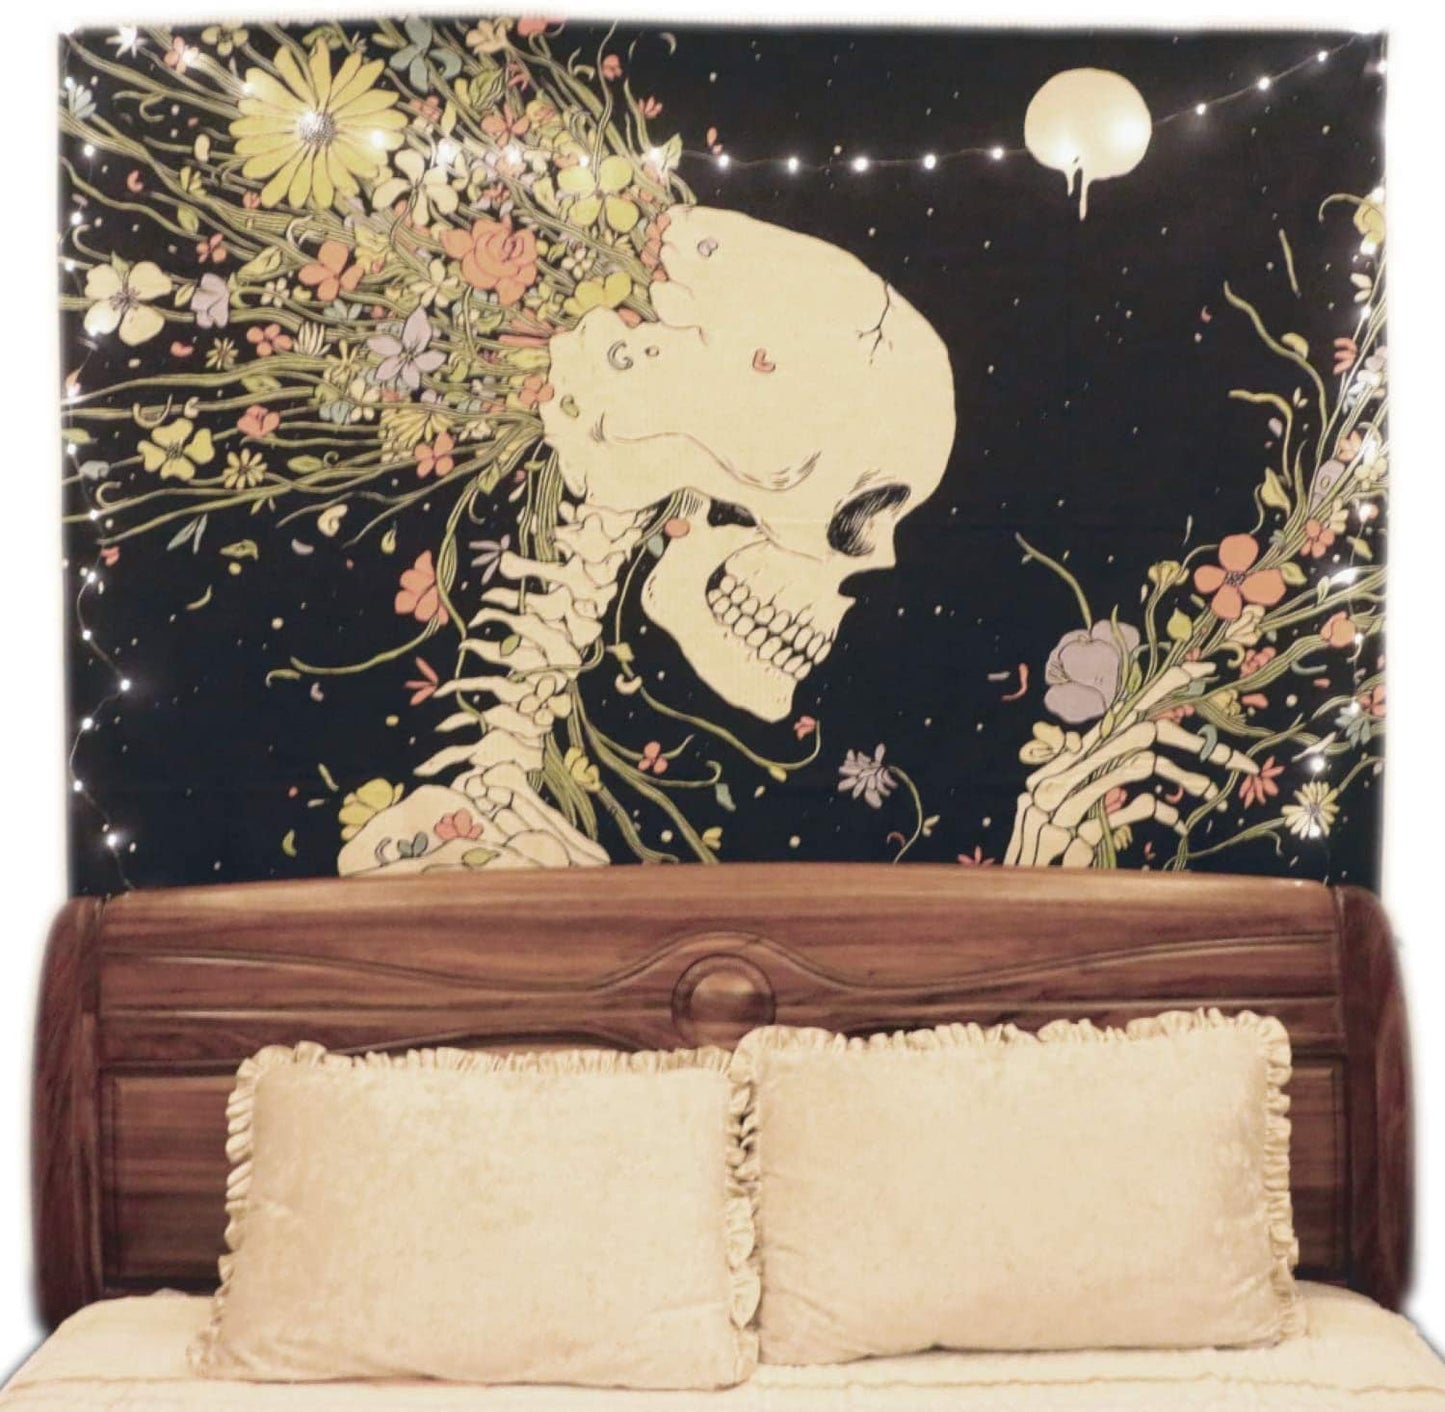 Psychedelic Gothic Flower Skull Tapestry Blackbrdstore